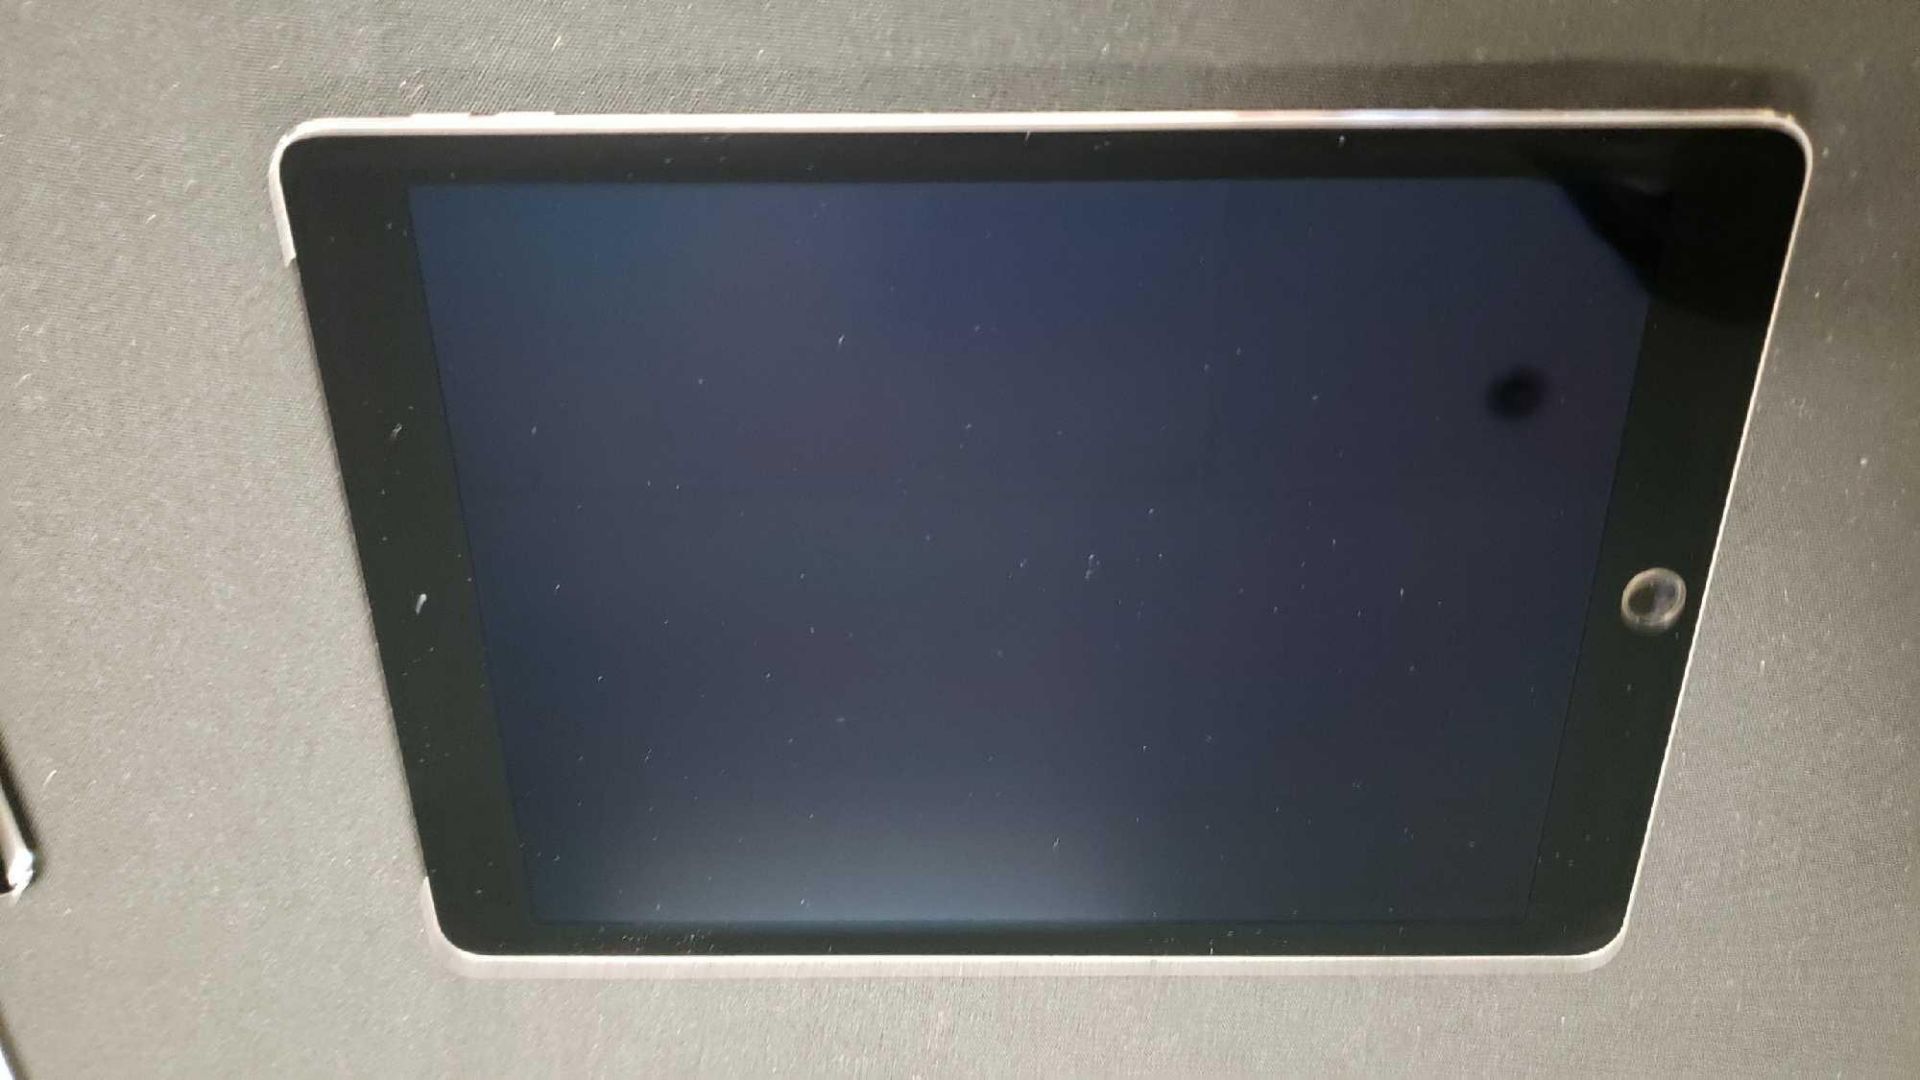 iPad Air 2, 32 Gb, Screen Size 9.7 inches